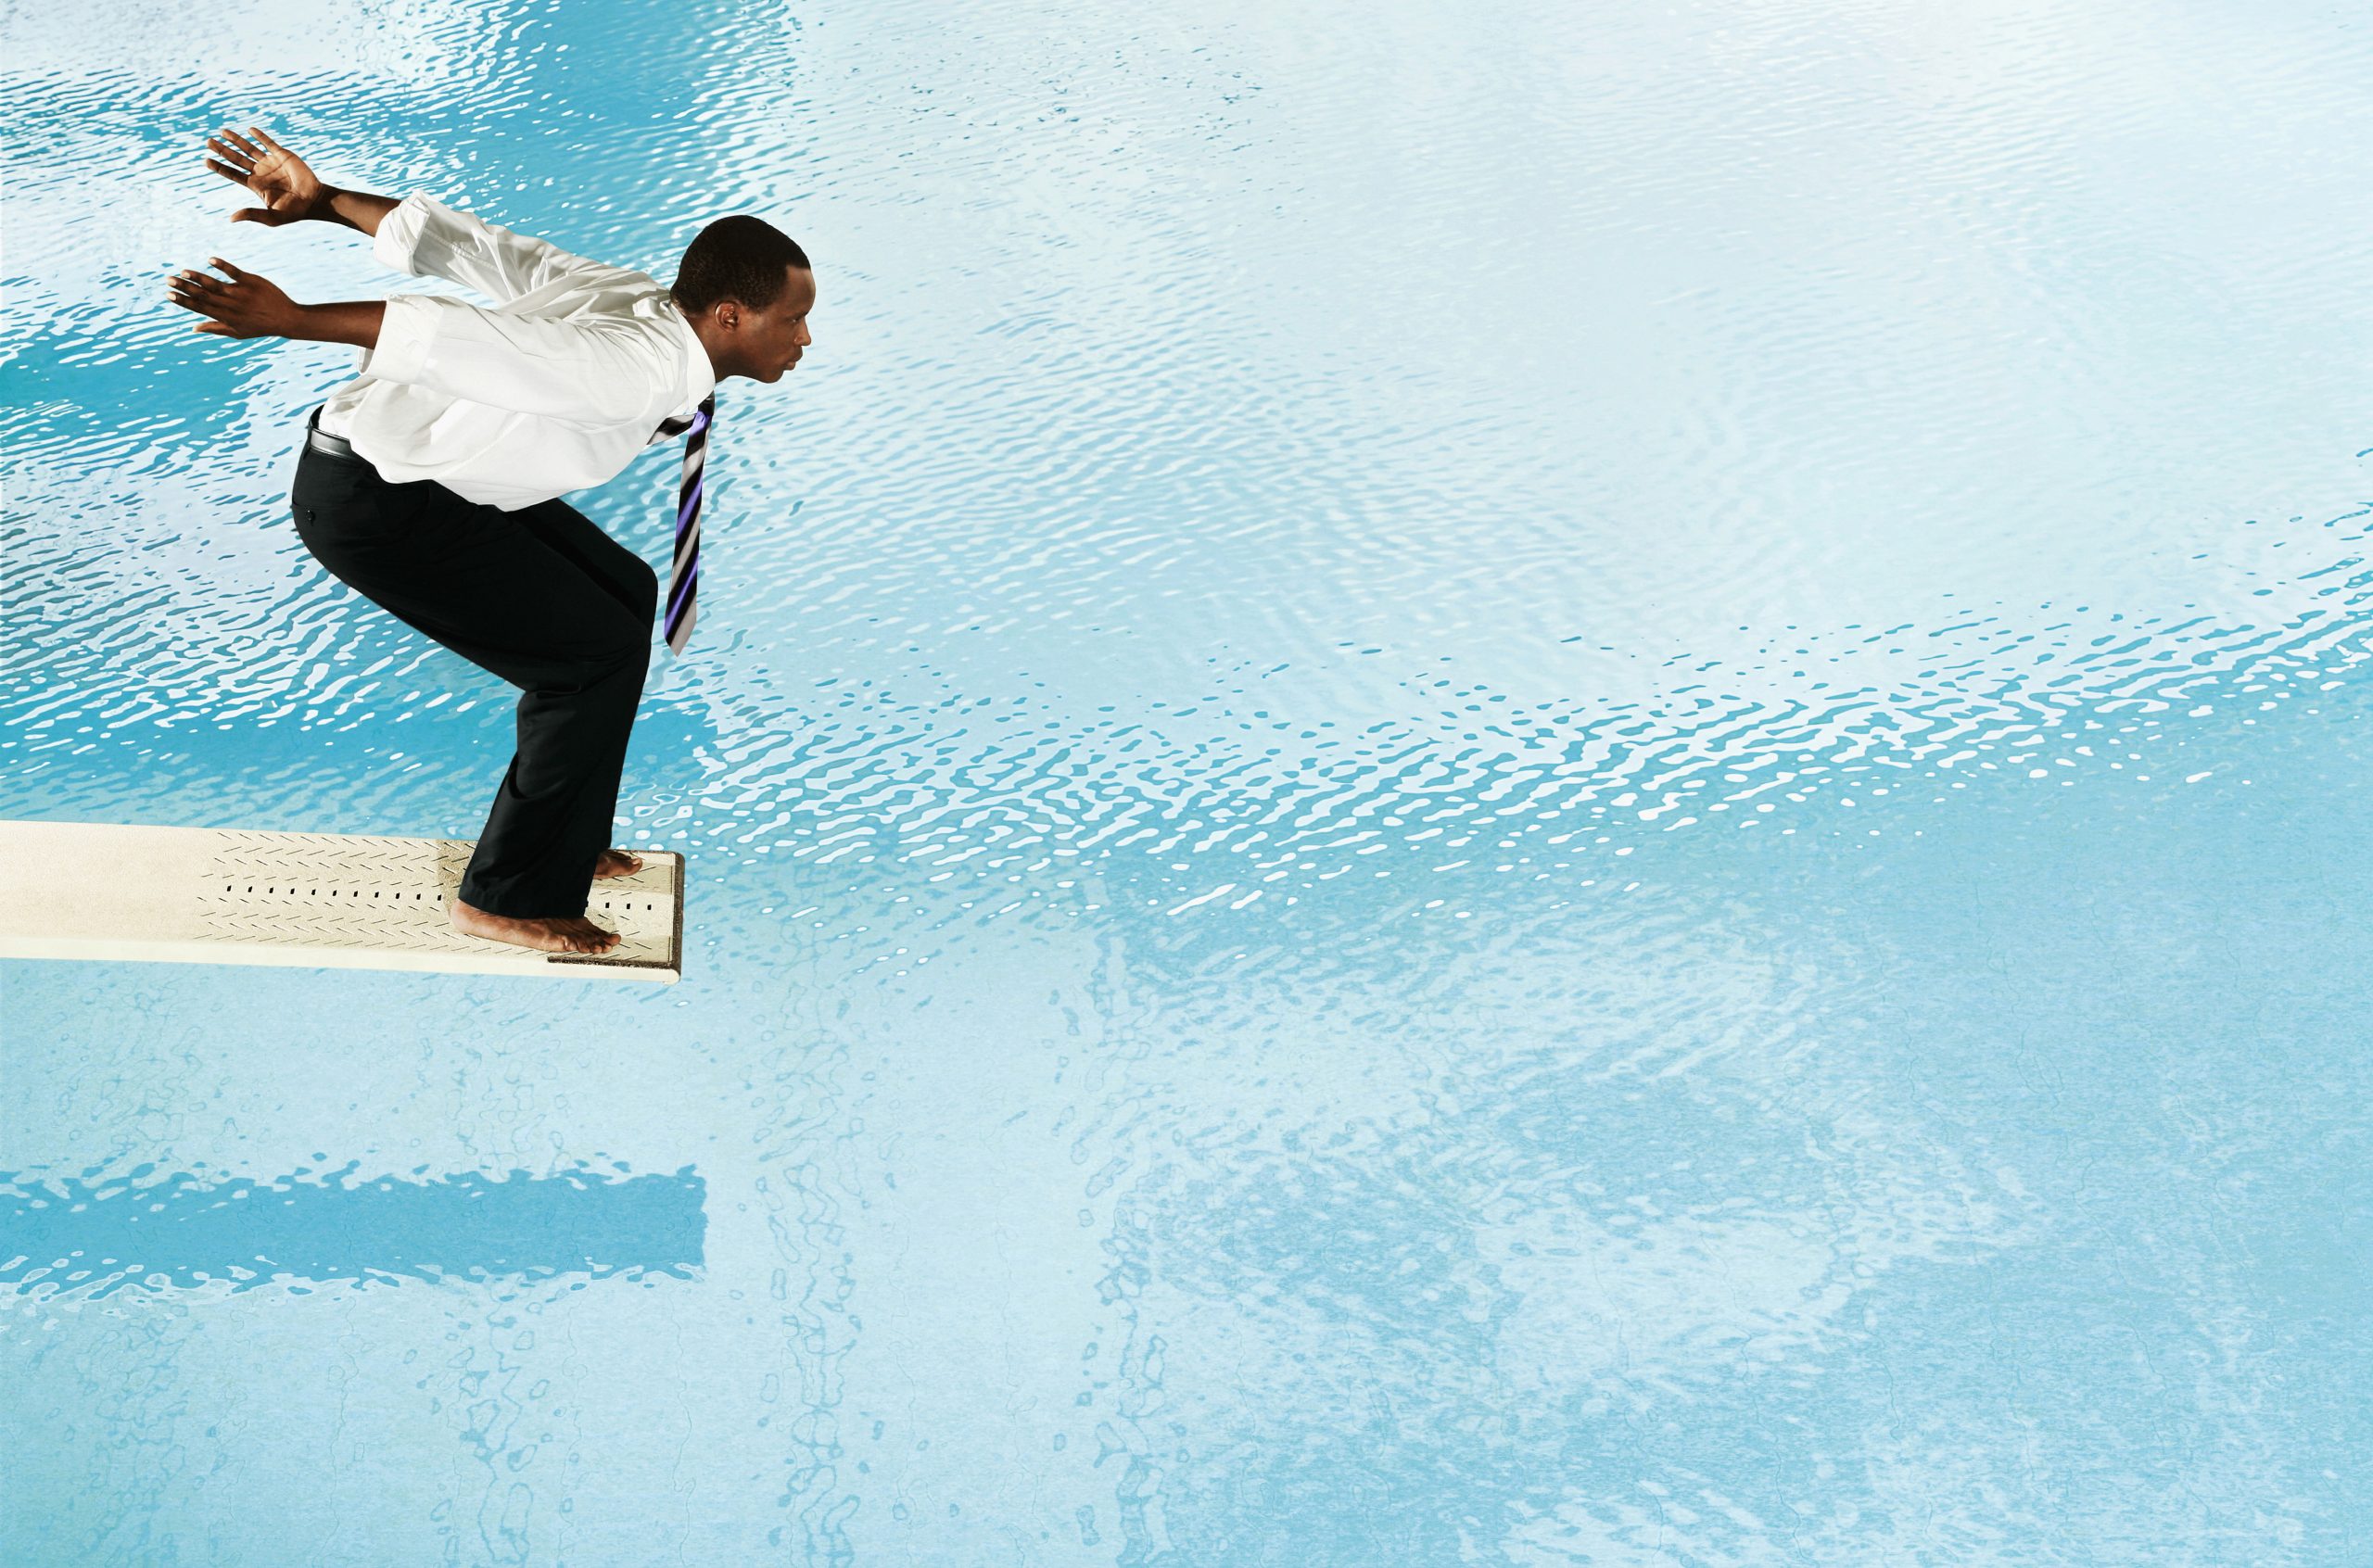 https://depositphotos.com/385055884/stock-photo-businessman-jump-diving-board.html